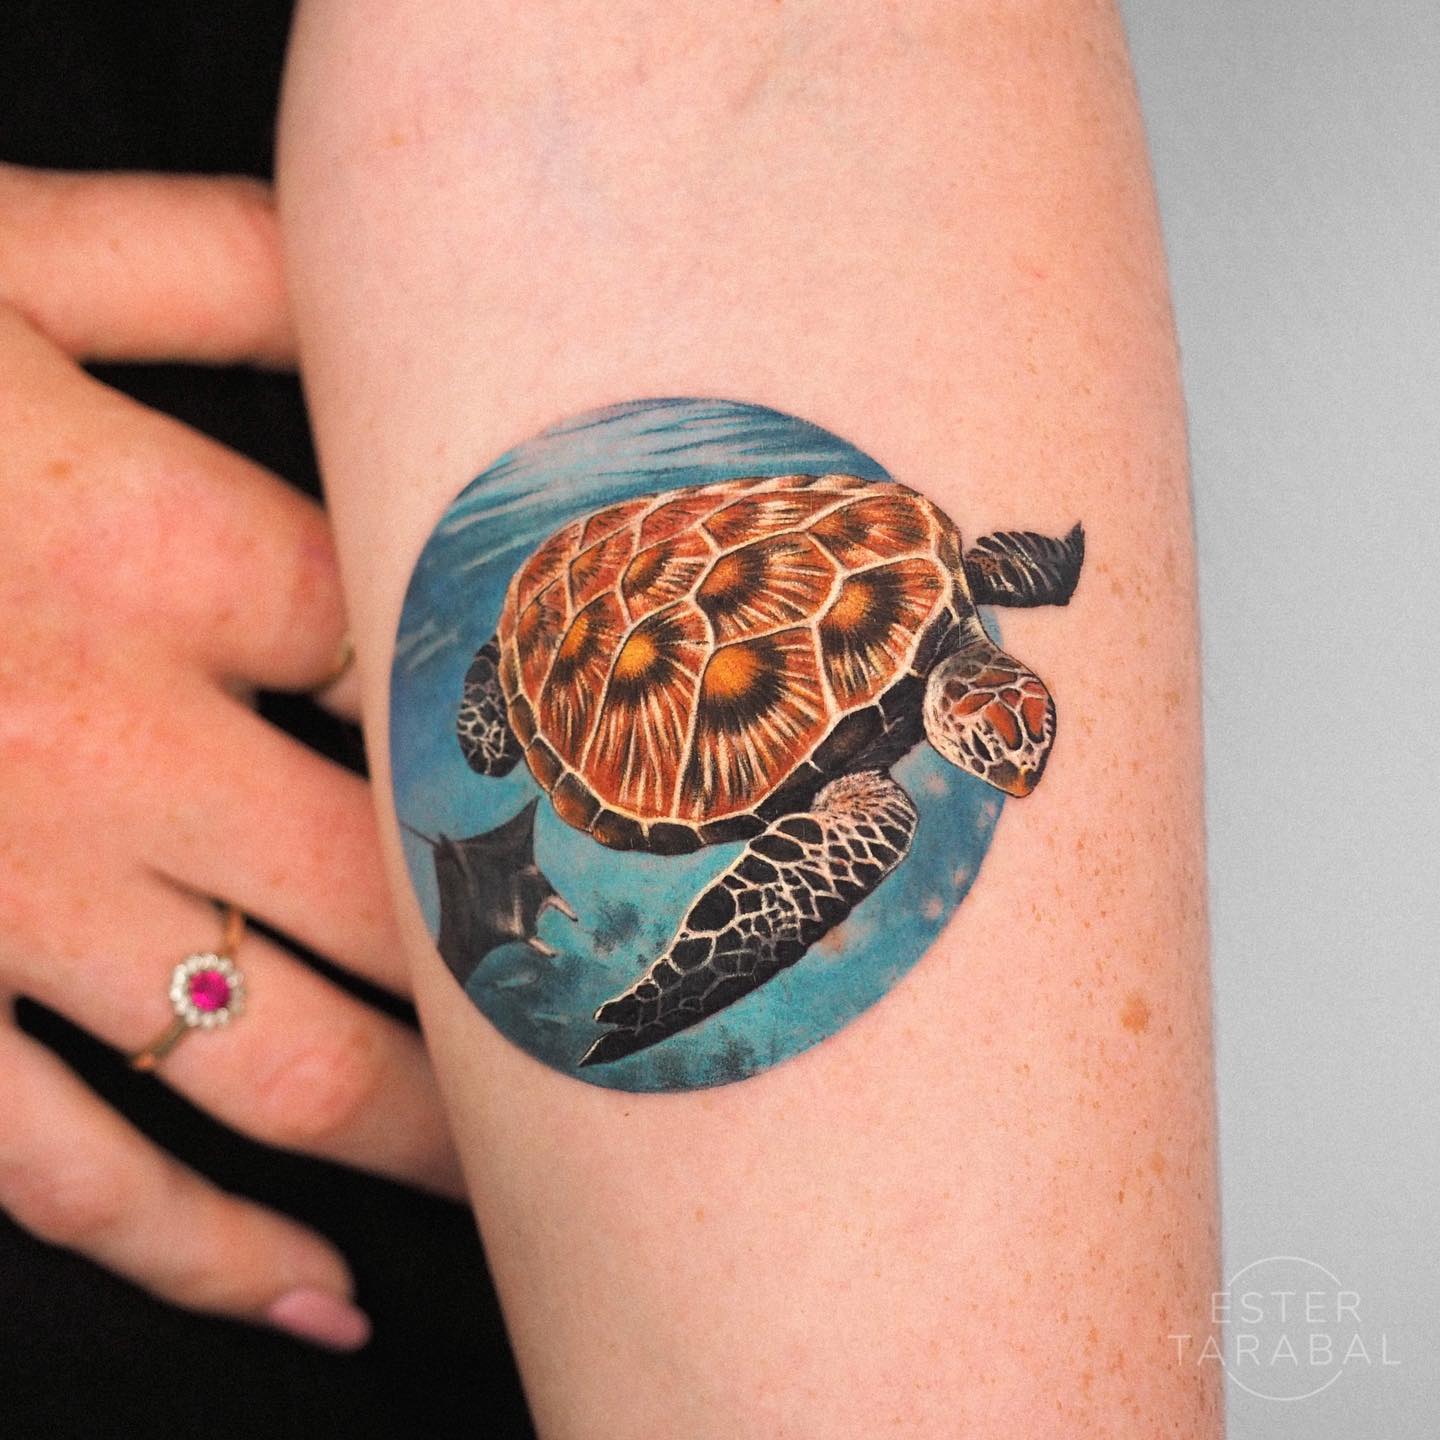 Tatuaje realista de tortuga marina